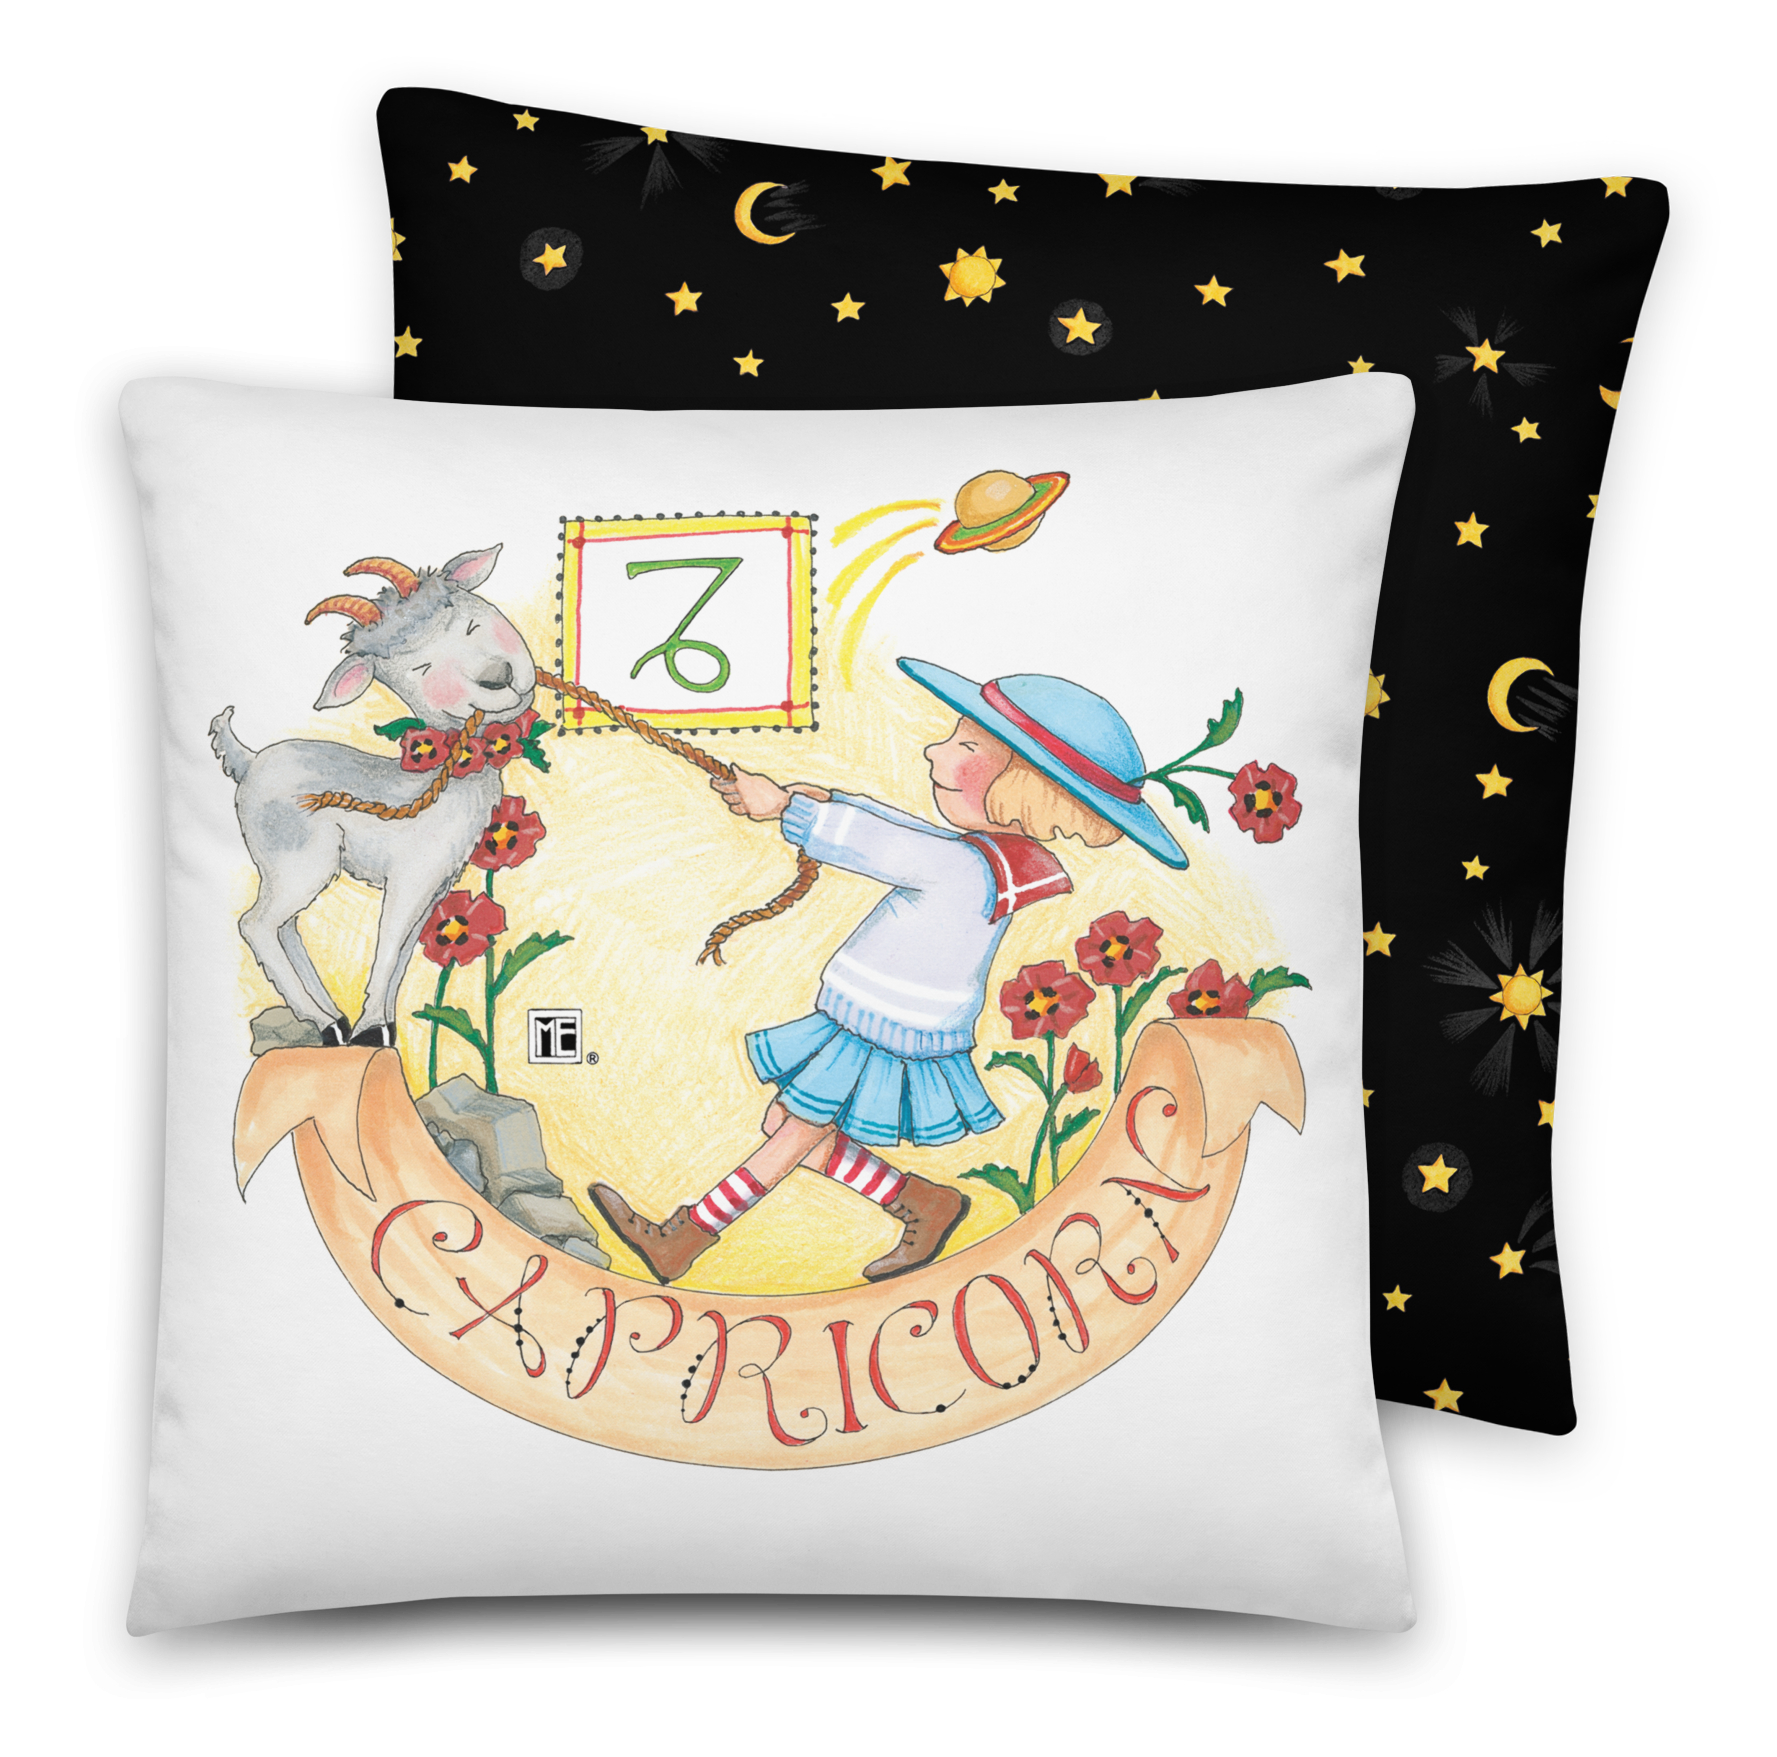 Capricorn Pillow